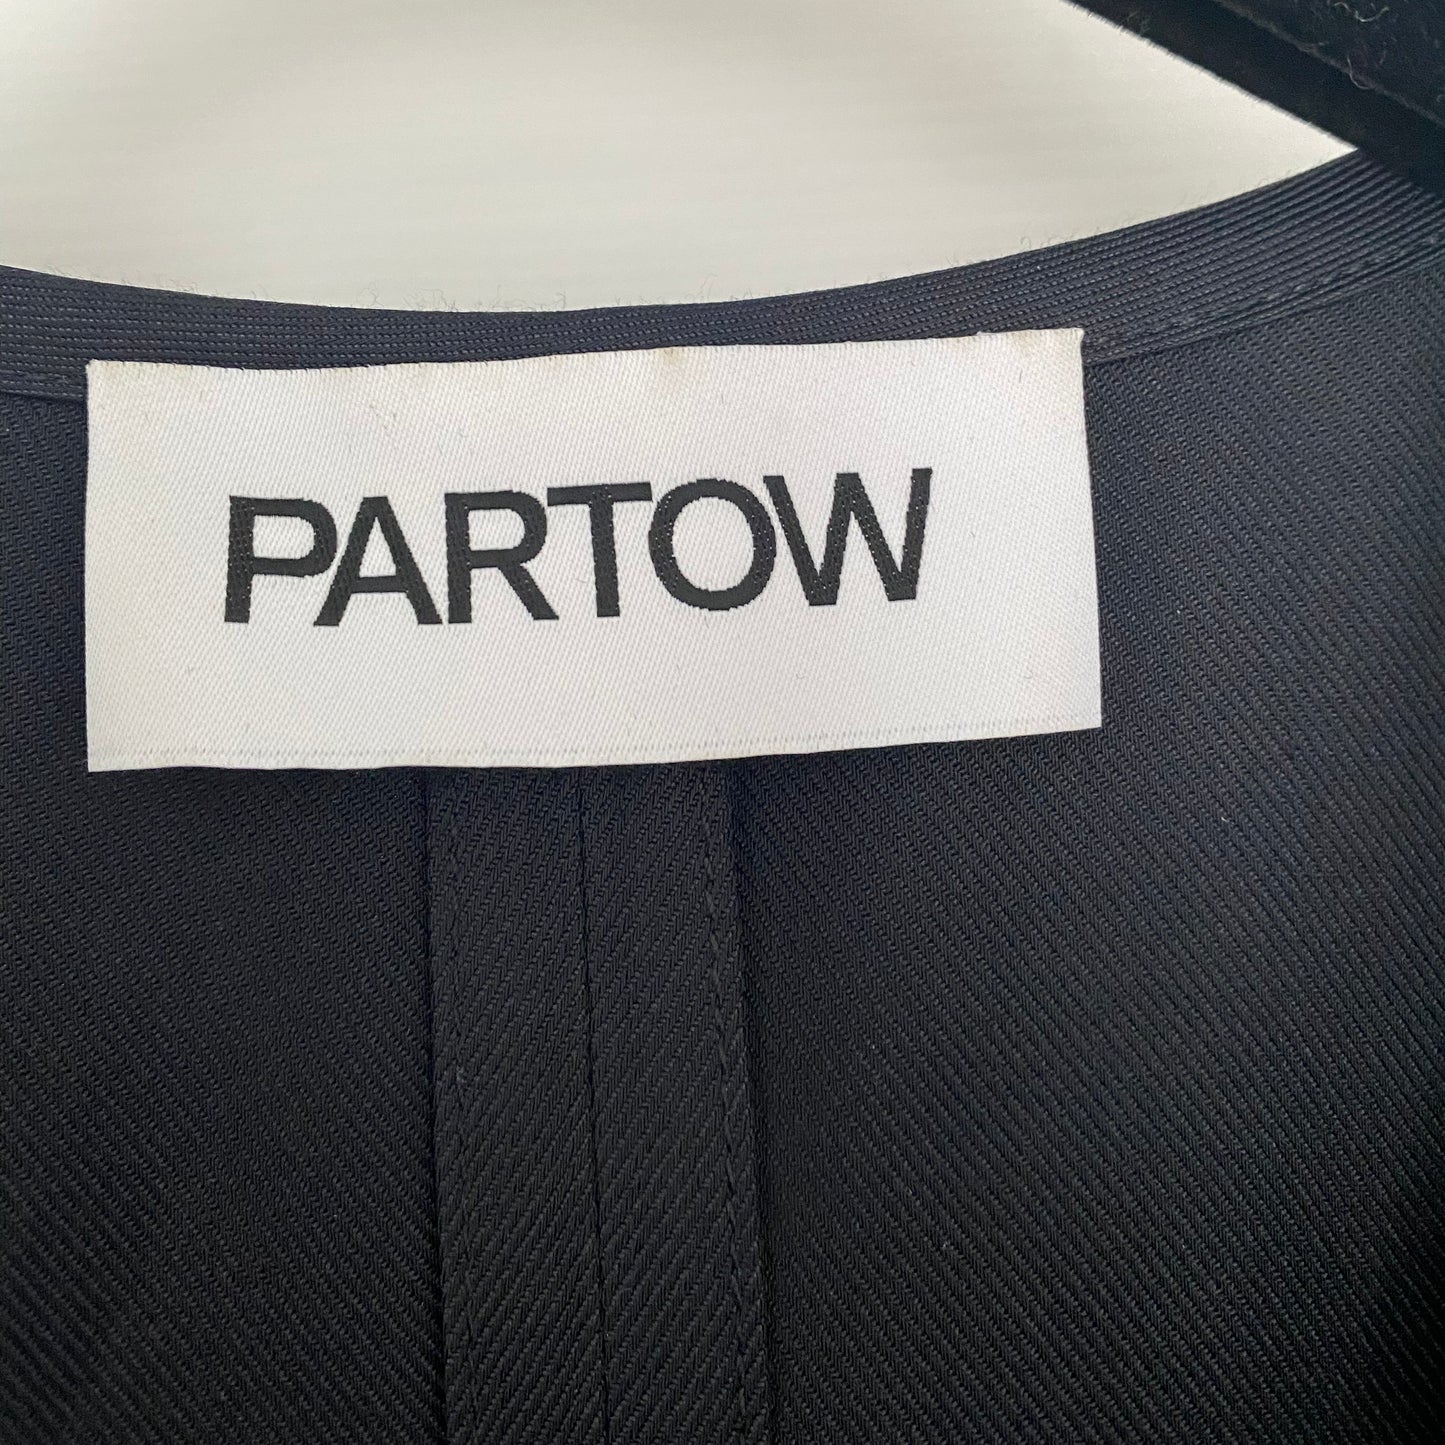 Partow Navy Viscose Shirtdress w Contrast Stitching, size 6